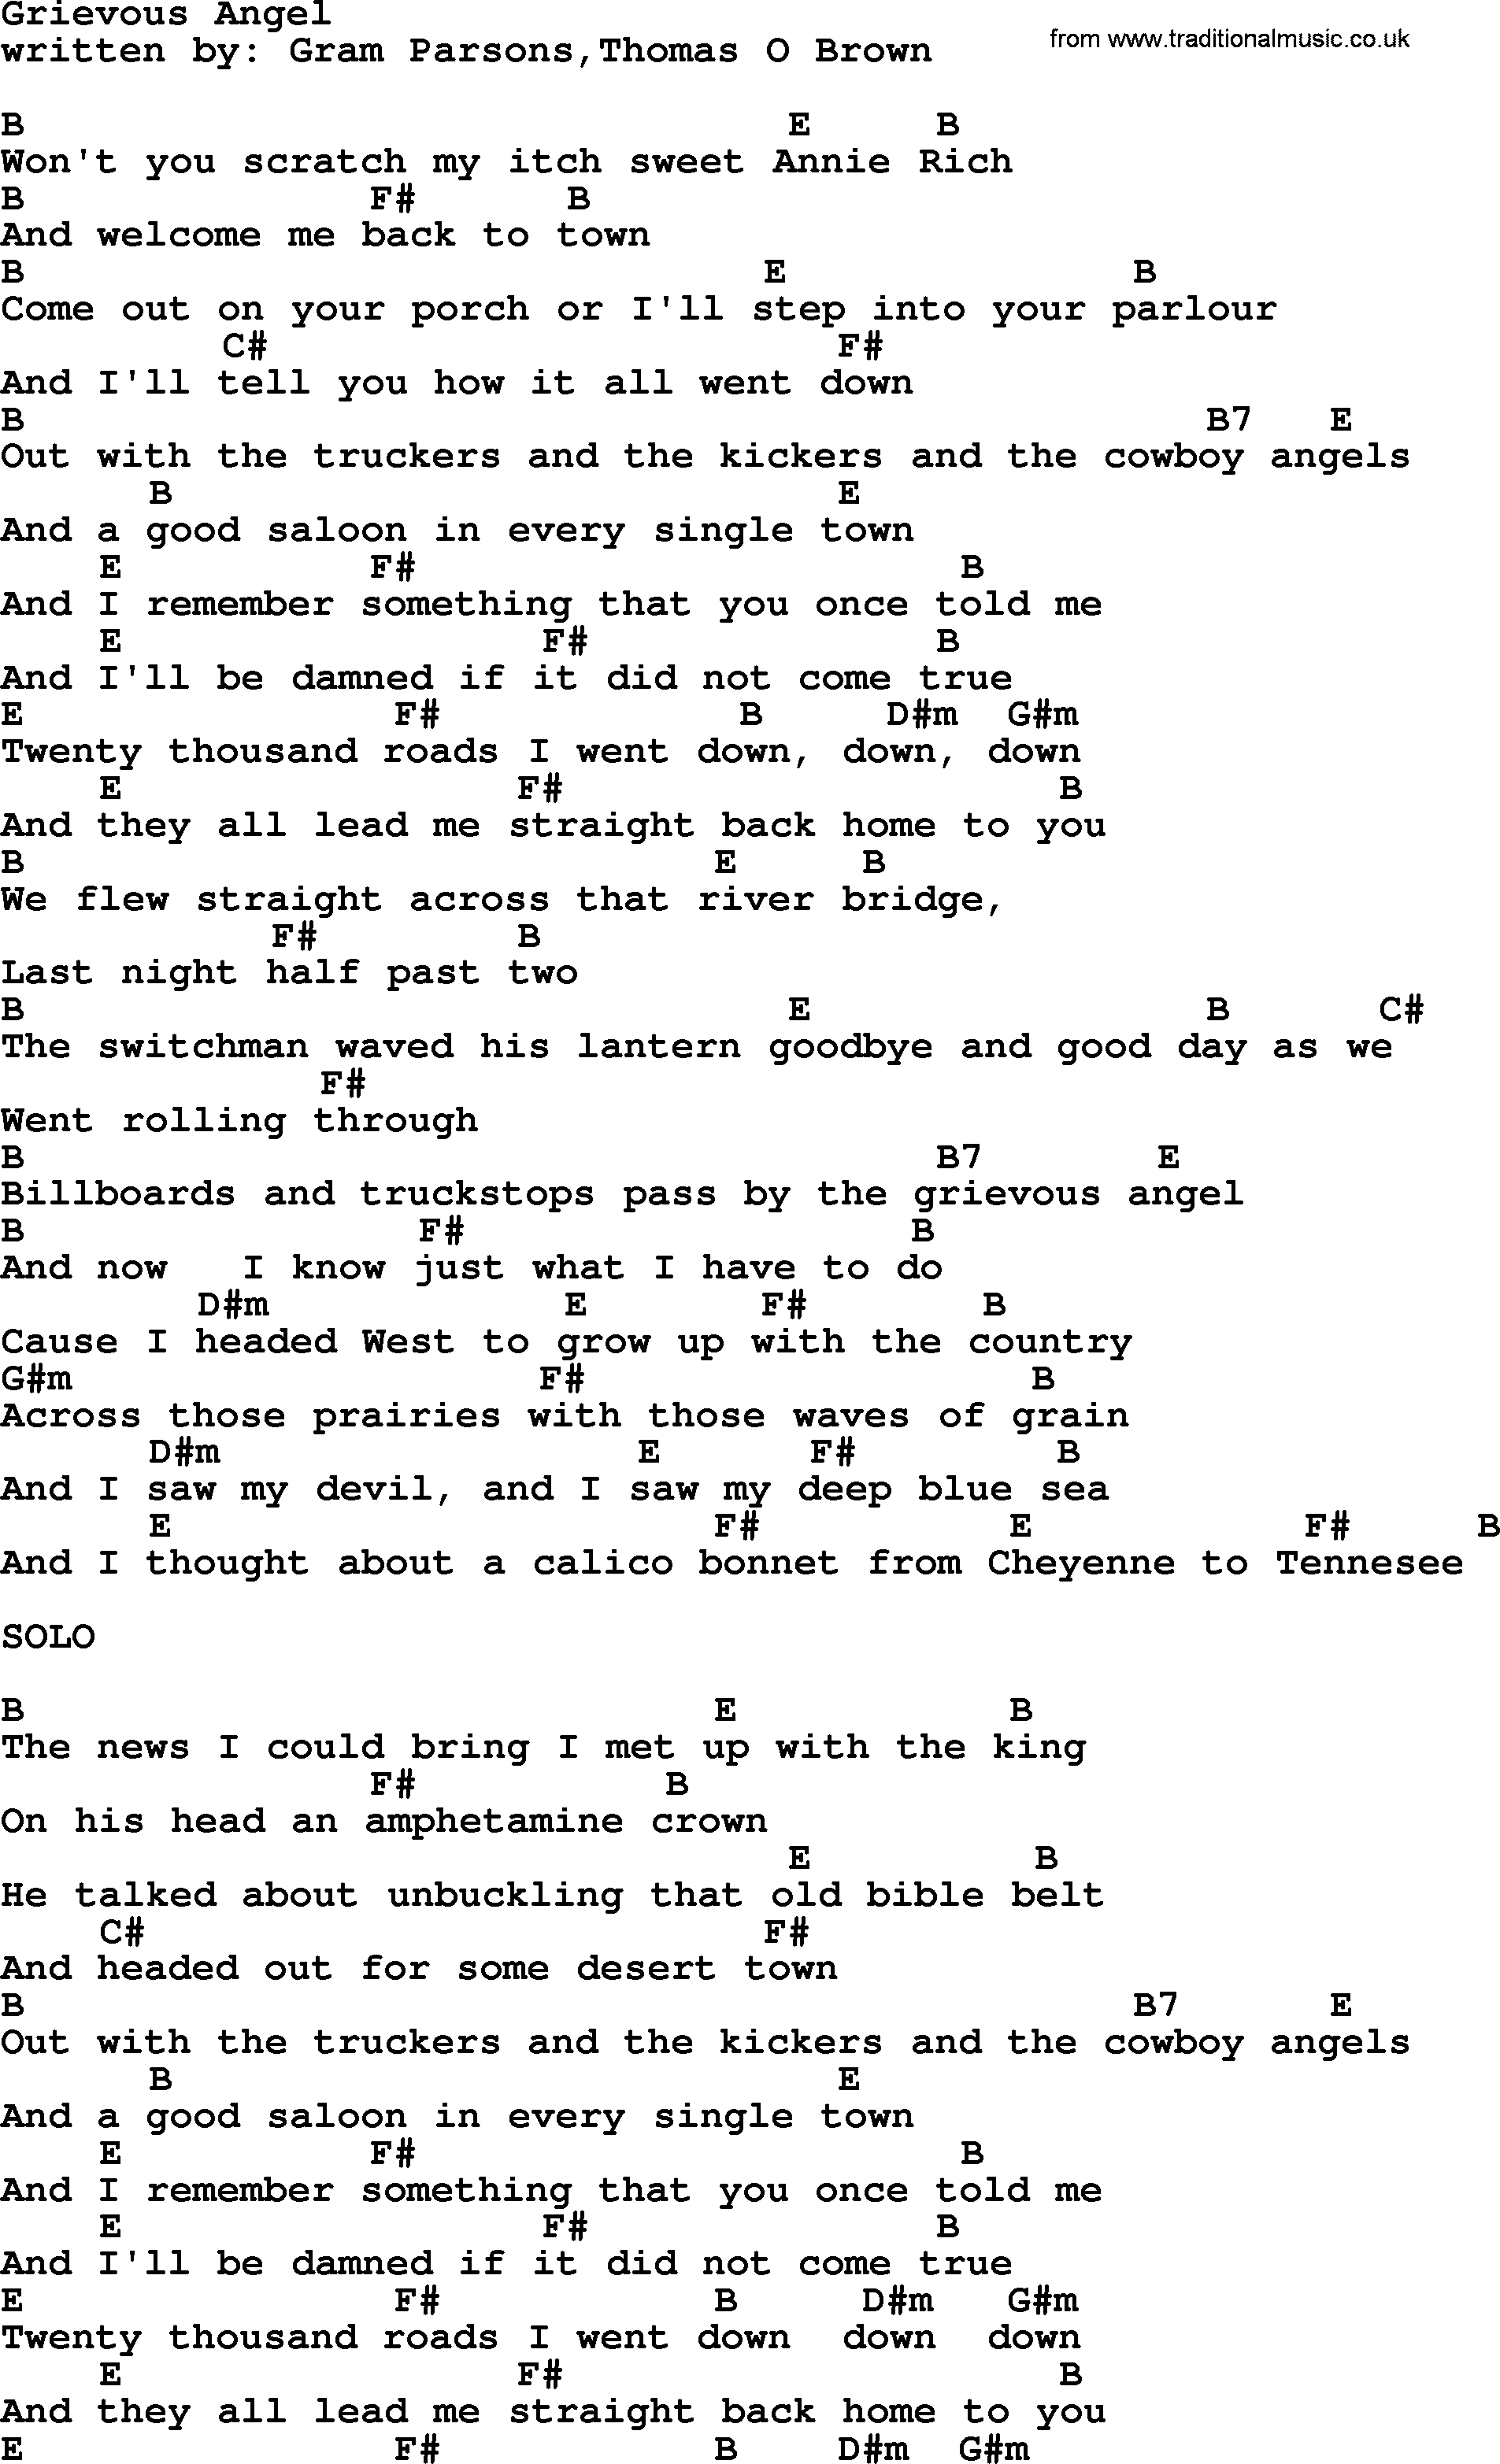 Emmylou Harris song: Grievous Angel lyrics and chords